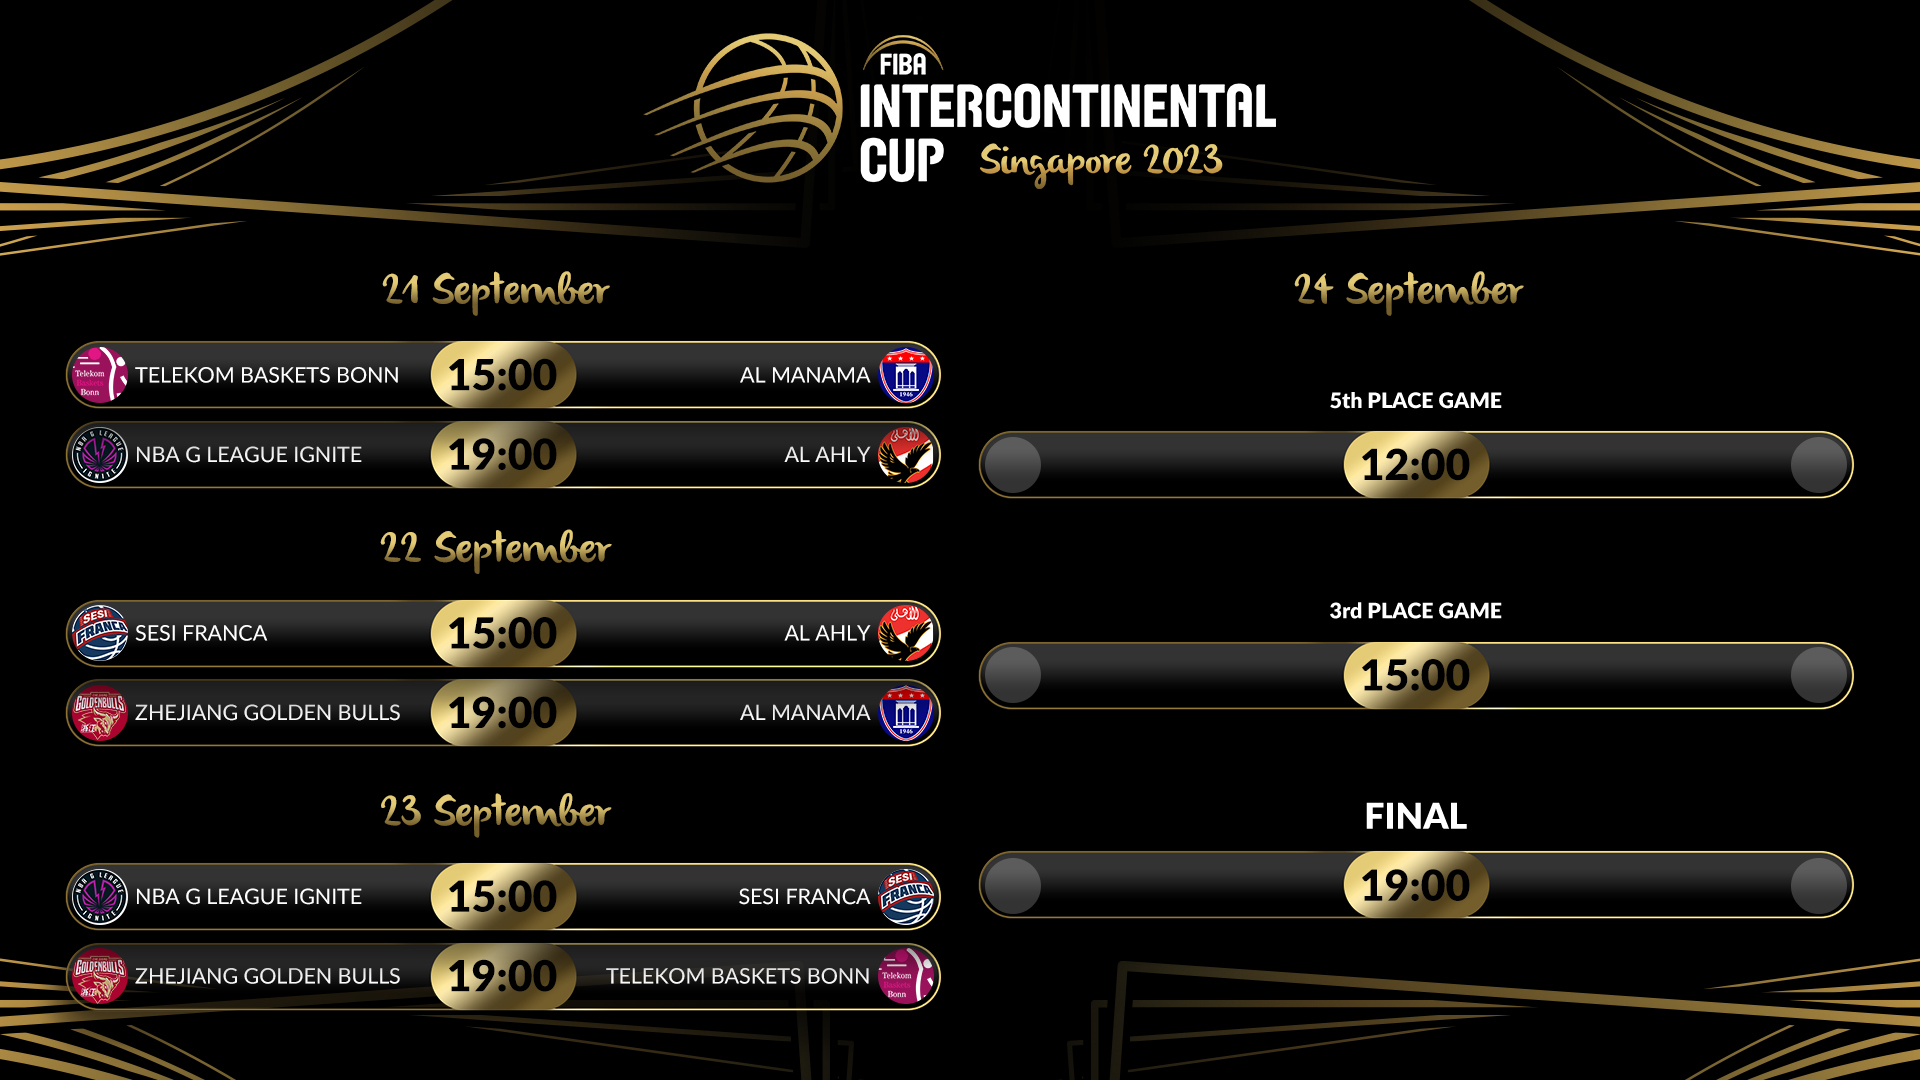 Meet the team: Golden Bulls are bringing the top scoring threat - 2023 FIBA  Intercontinental Cup Singapore 2023 